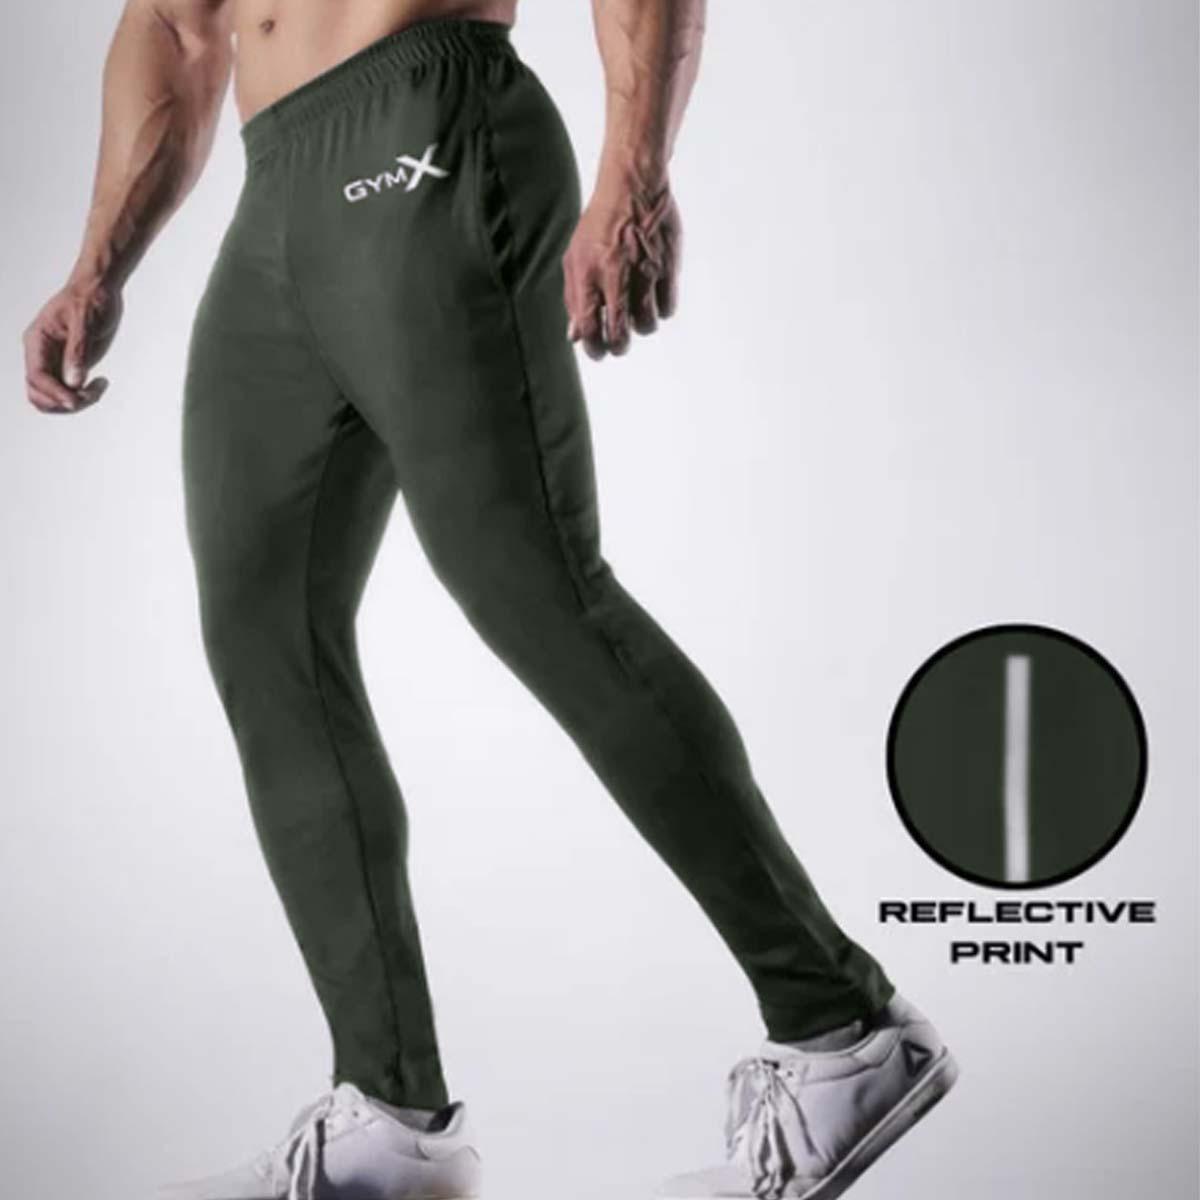 GymX Zurik Olive Green Sweatpants (Reflective Print)- Sale